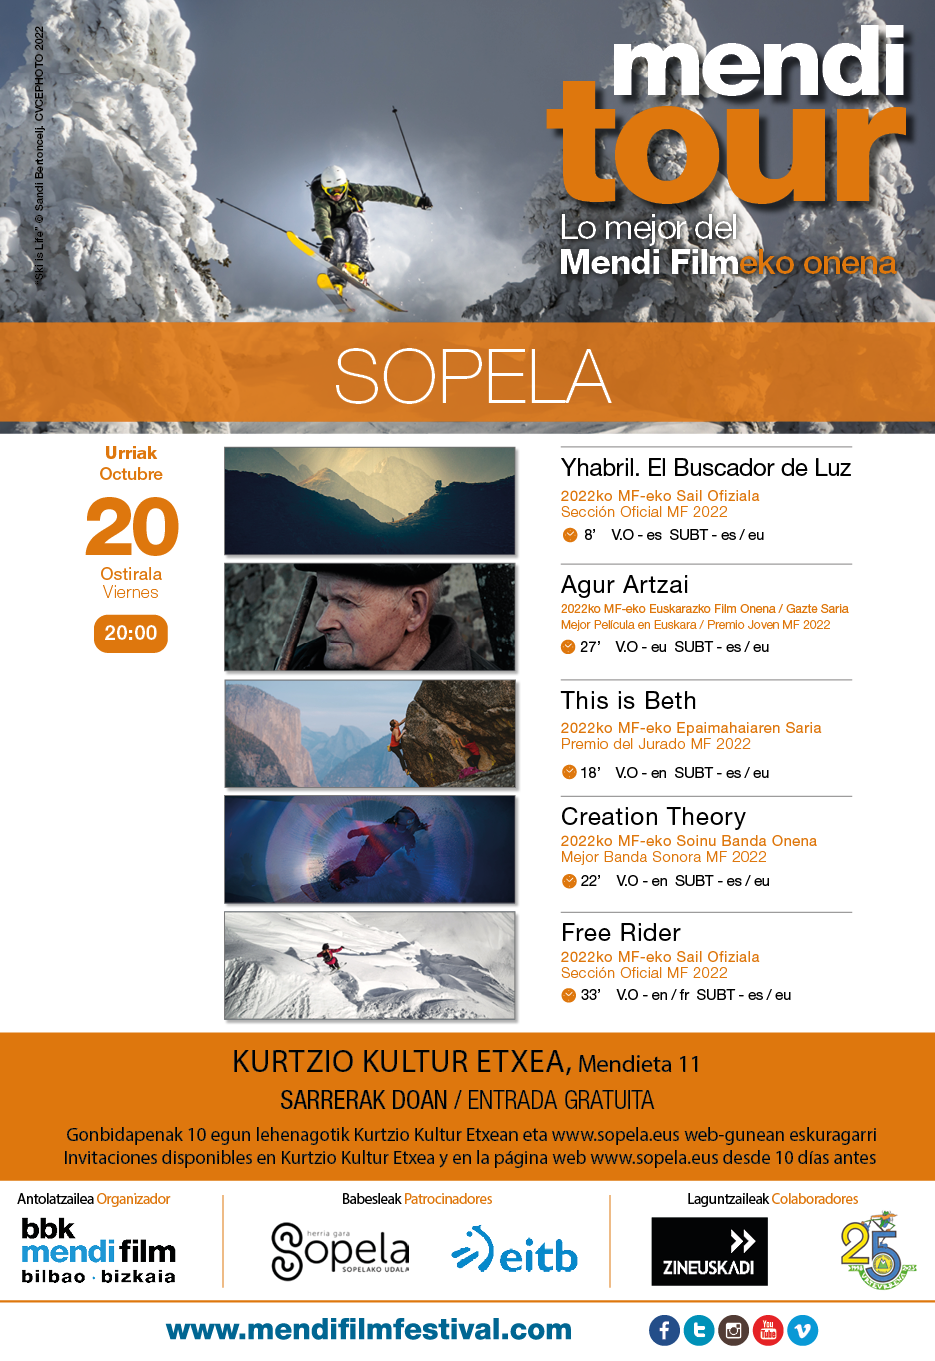 Kurtzio Kultur Etxea. Mendi Tour. 20 de Octubre 20:00hrs. Entrada gratuita